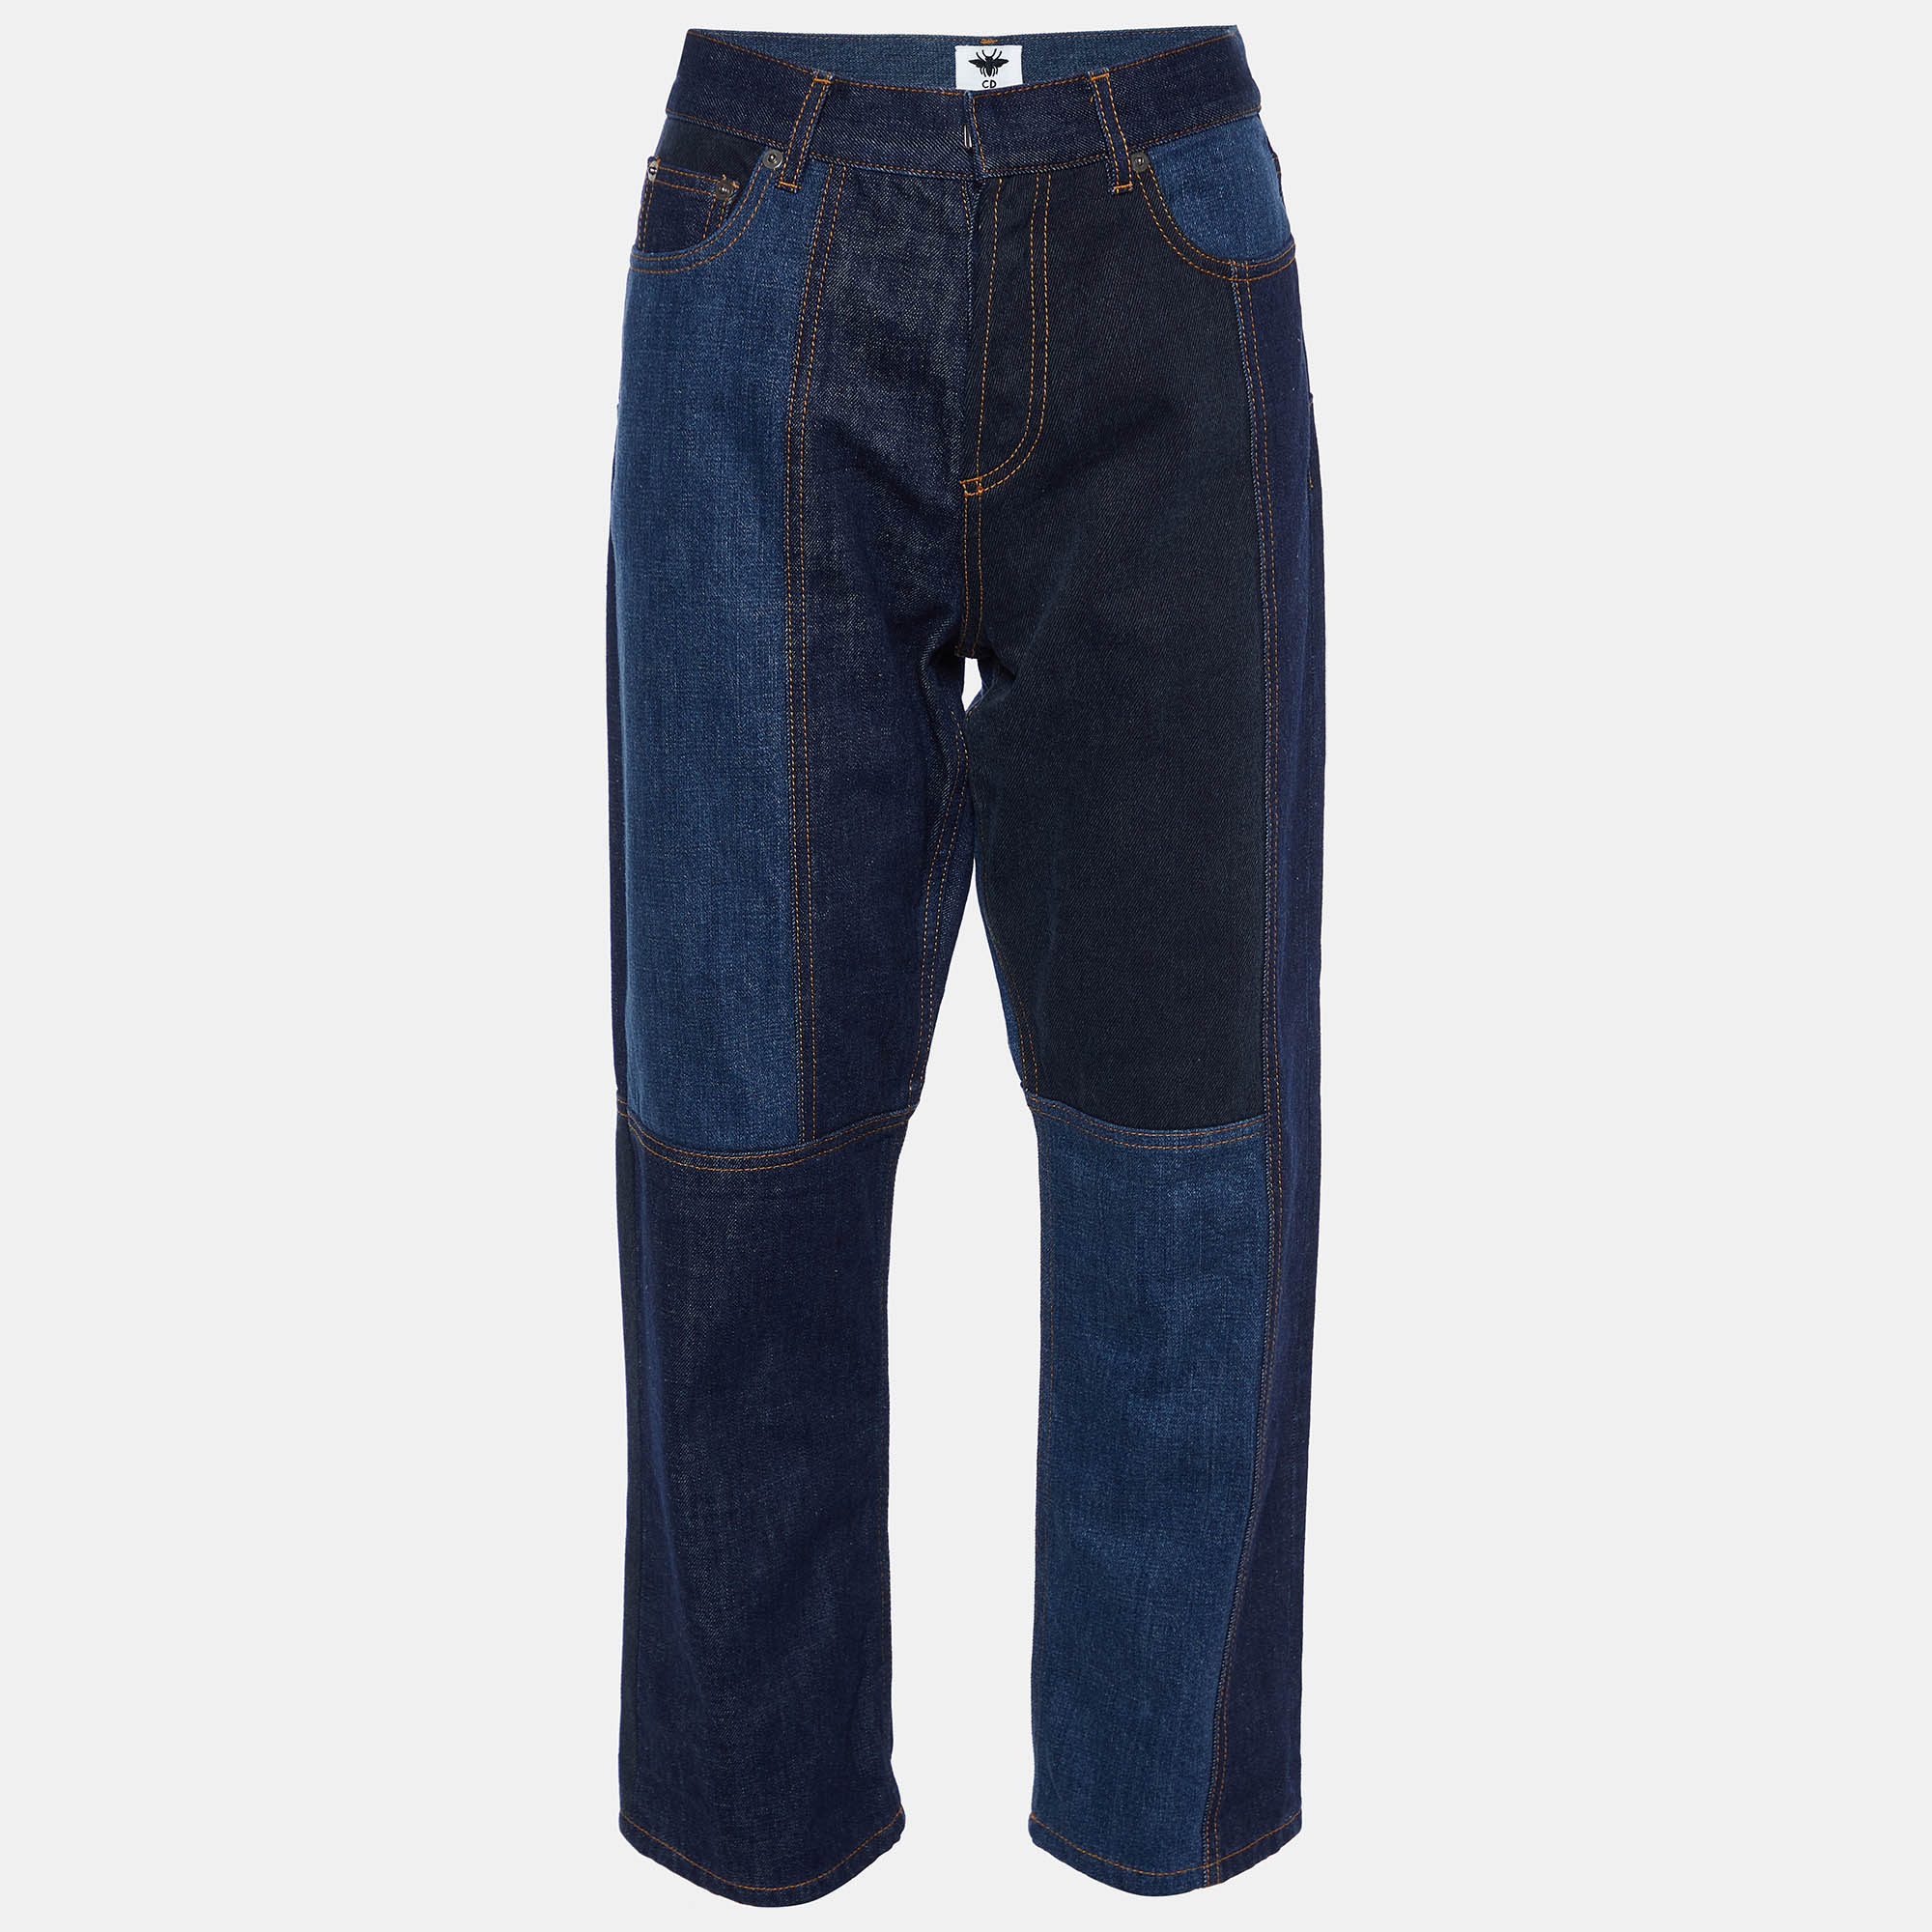 Christian dior blue patchwork denim jeans m